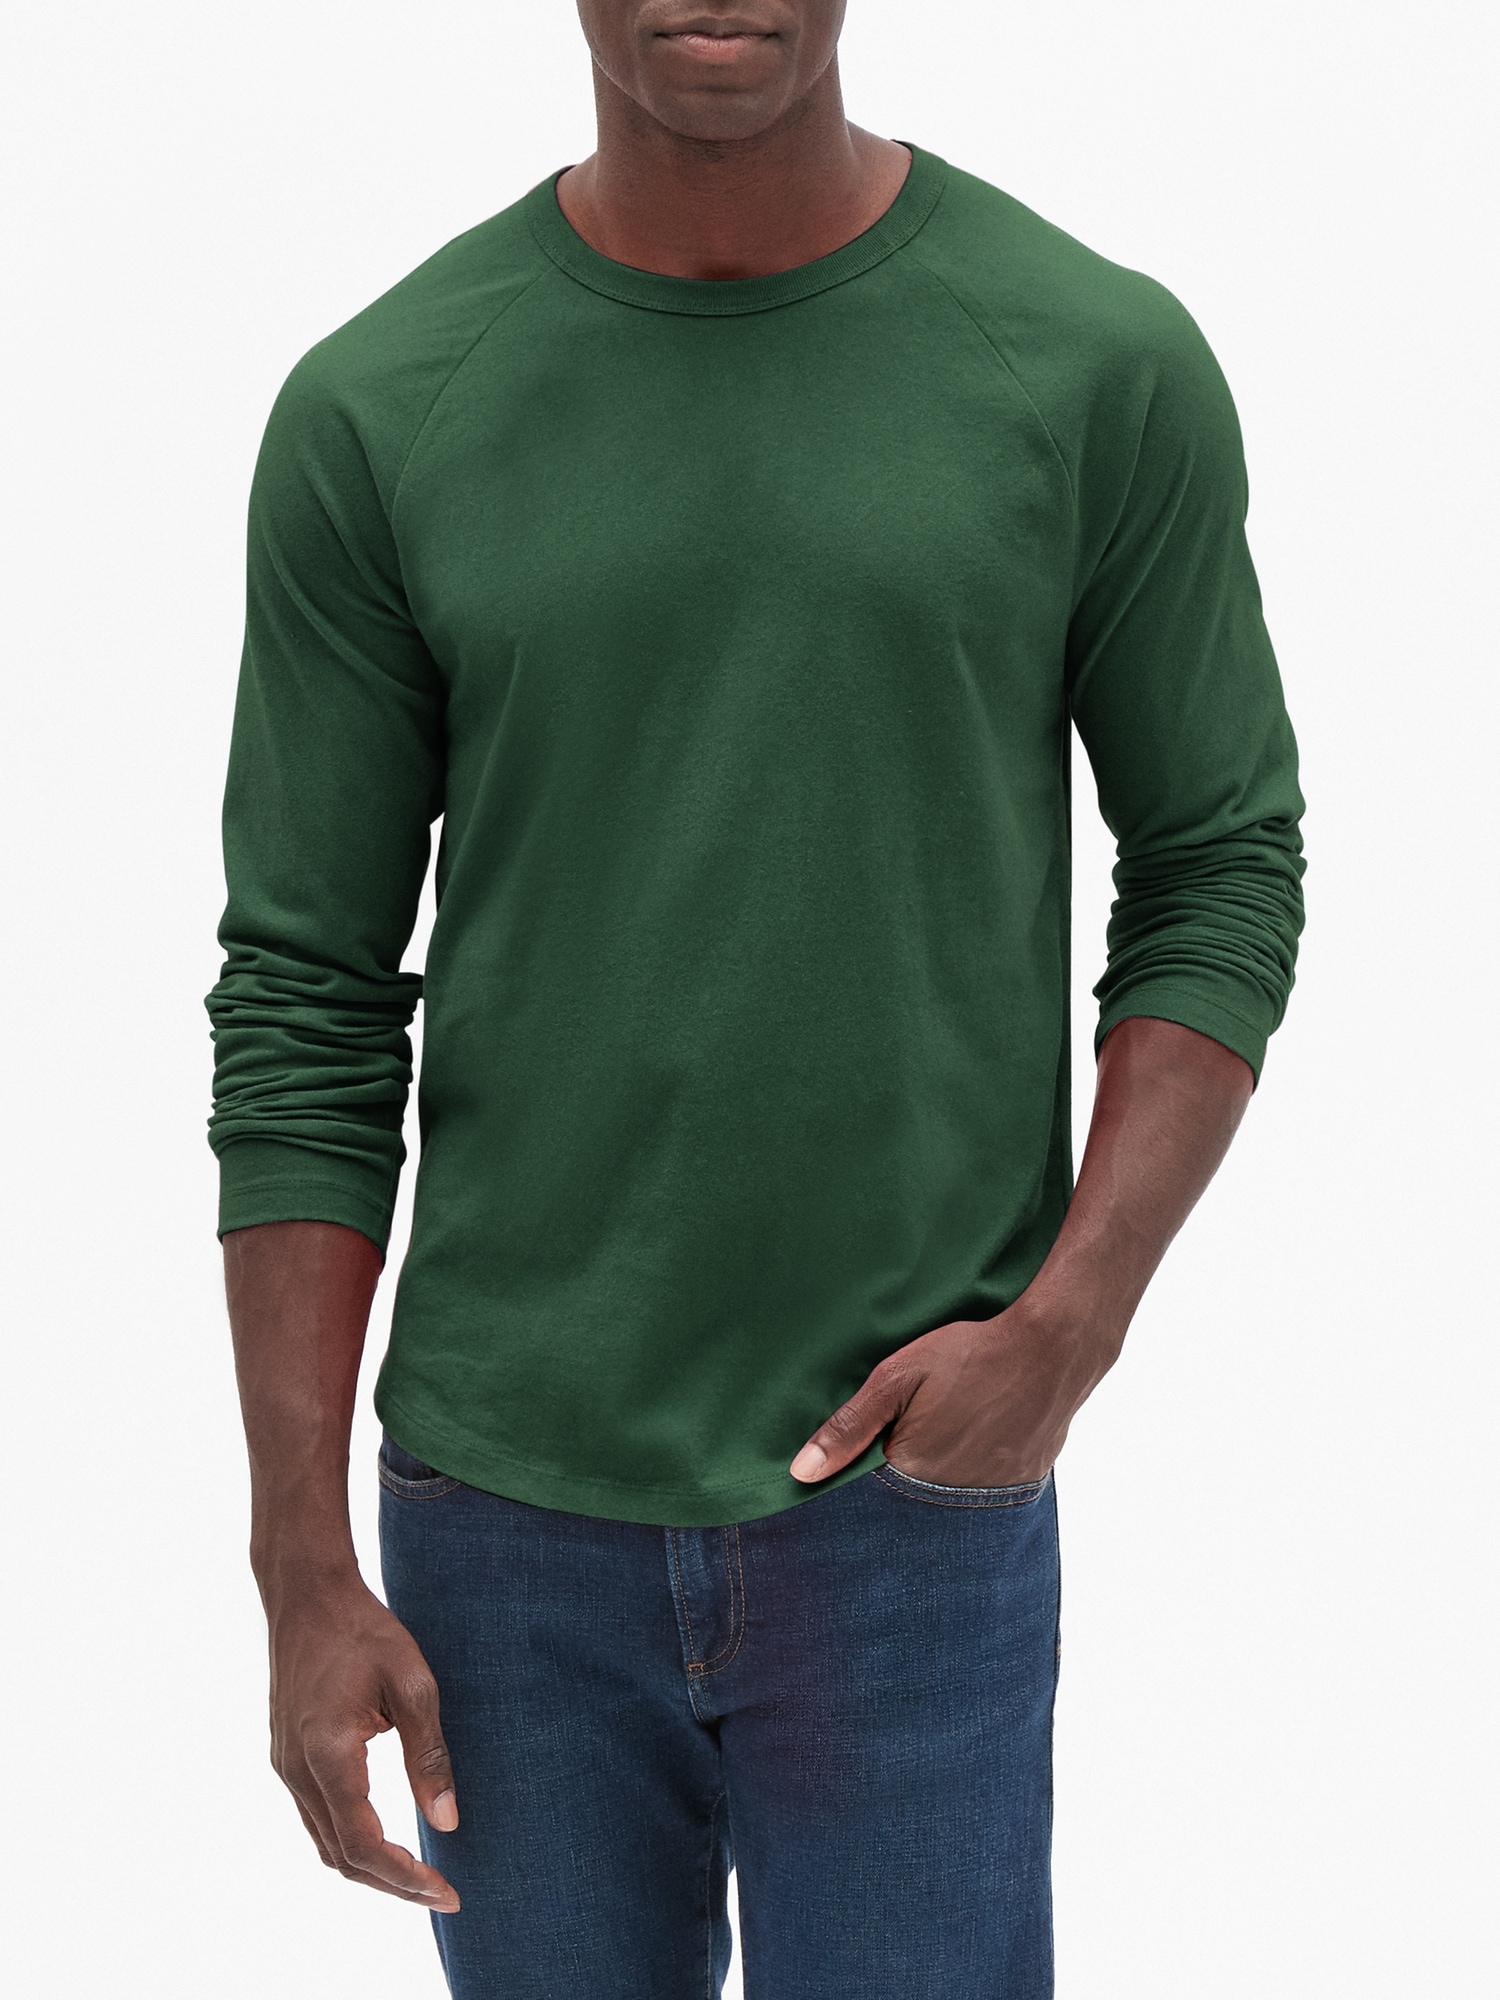 Men's Vintage Soft Crewneck Sweatshirt by Gap Tapestry Navy Size L